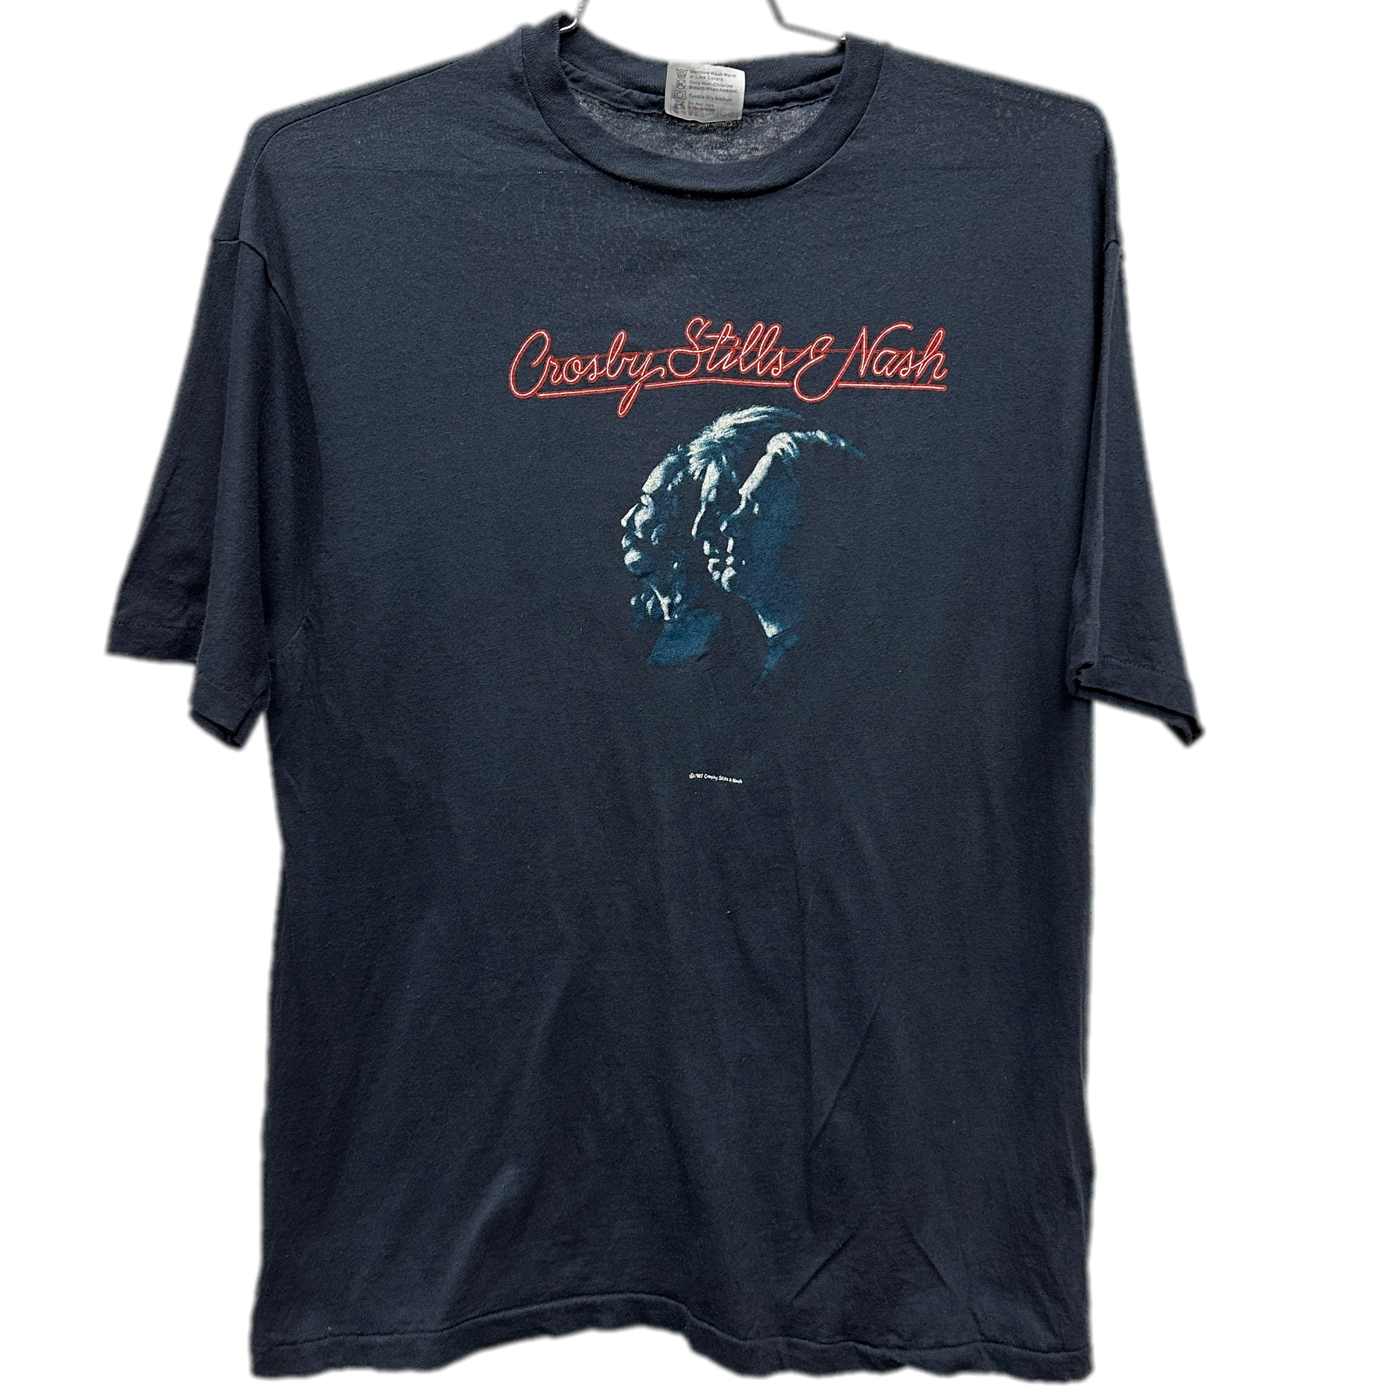 '87 Crosby Stills & Nash Black Music T-shirt sz XL